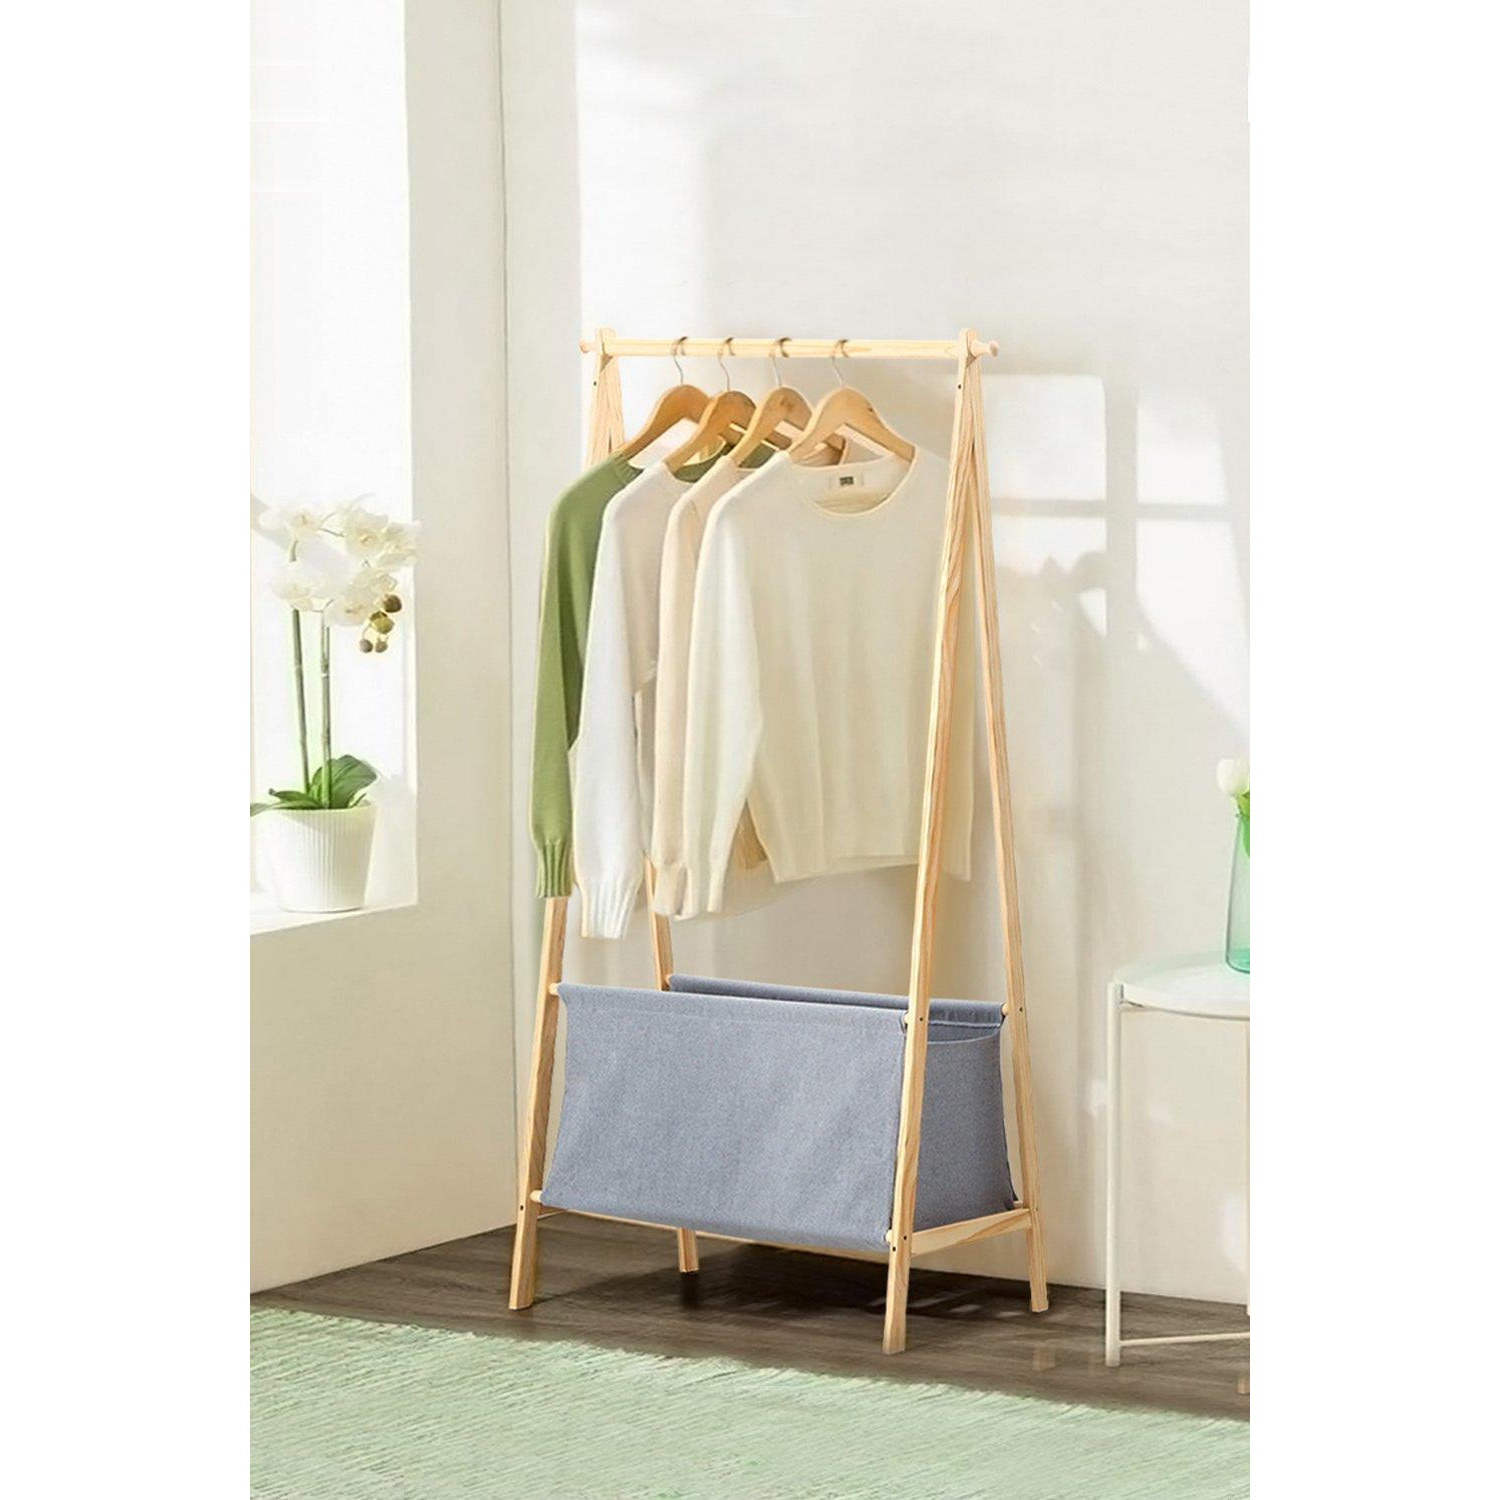 Wooden Clothes Rack Portable Garment Rack 1-Tier Storage Box Shelves - image 1